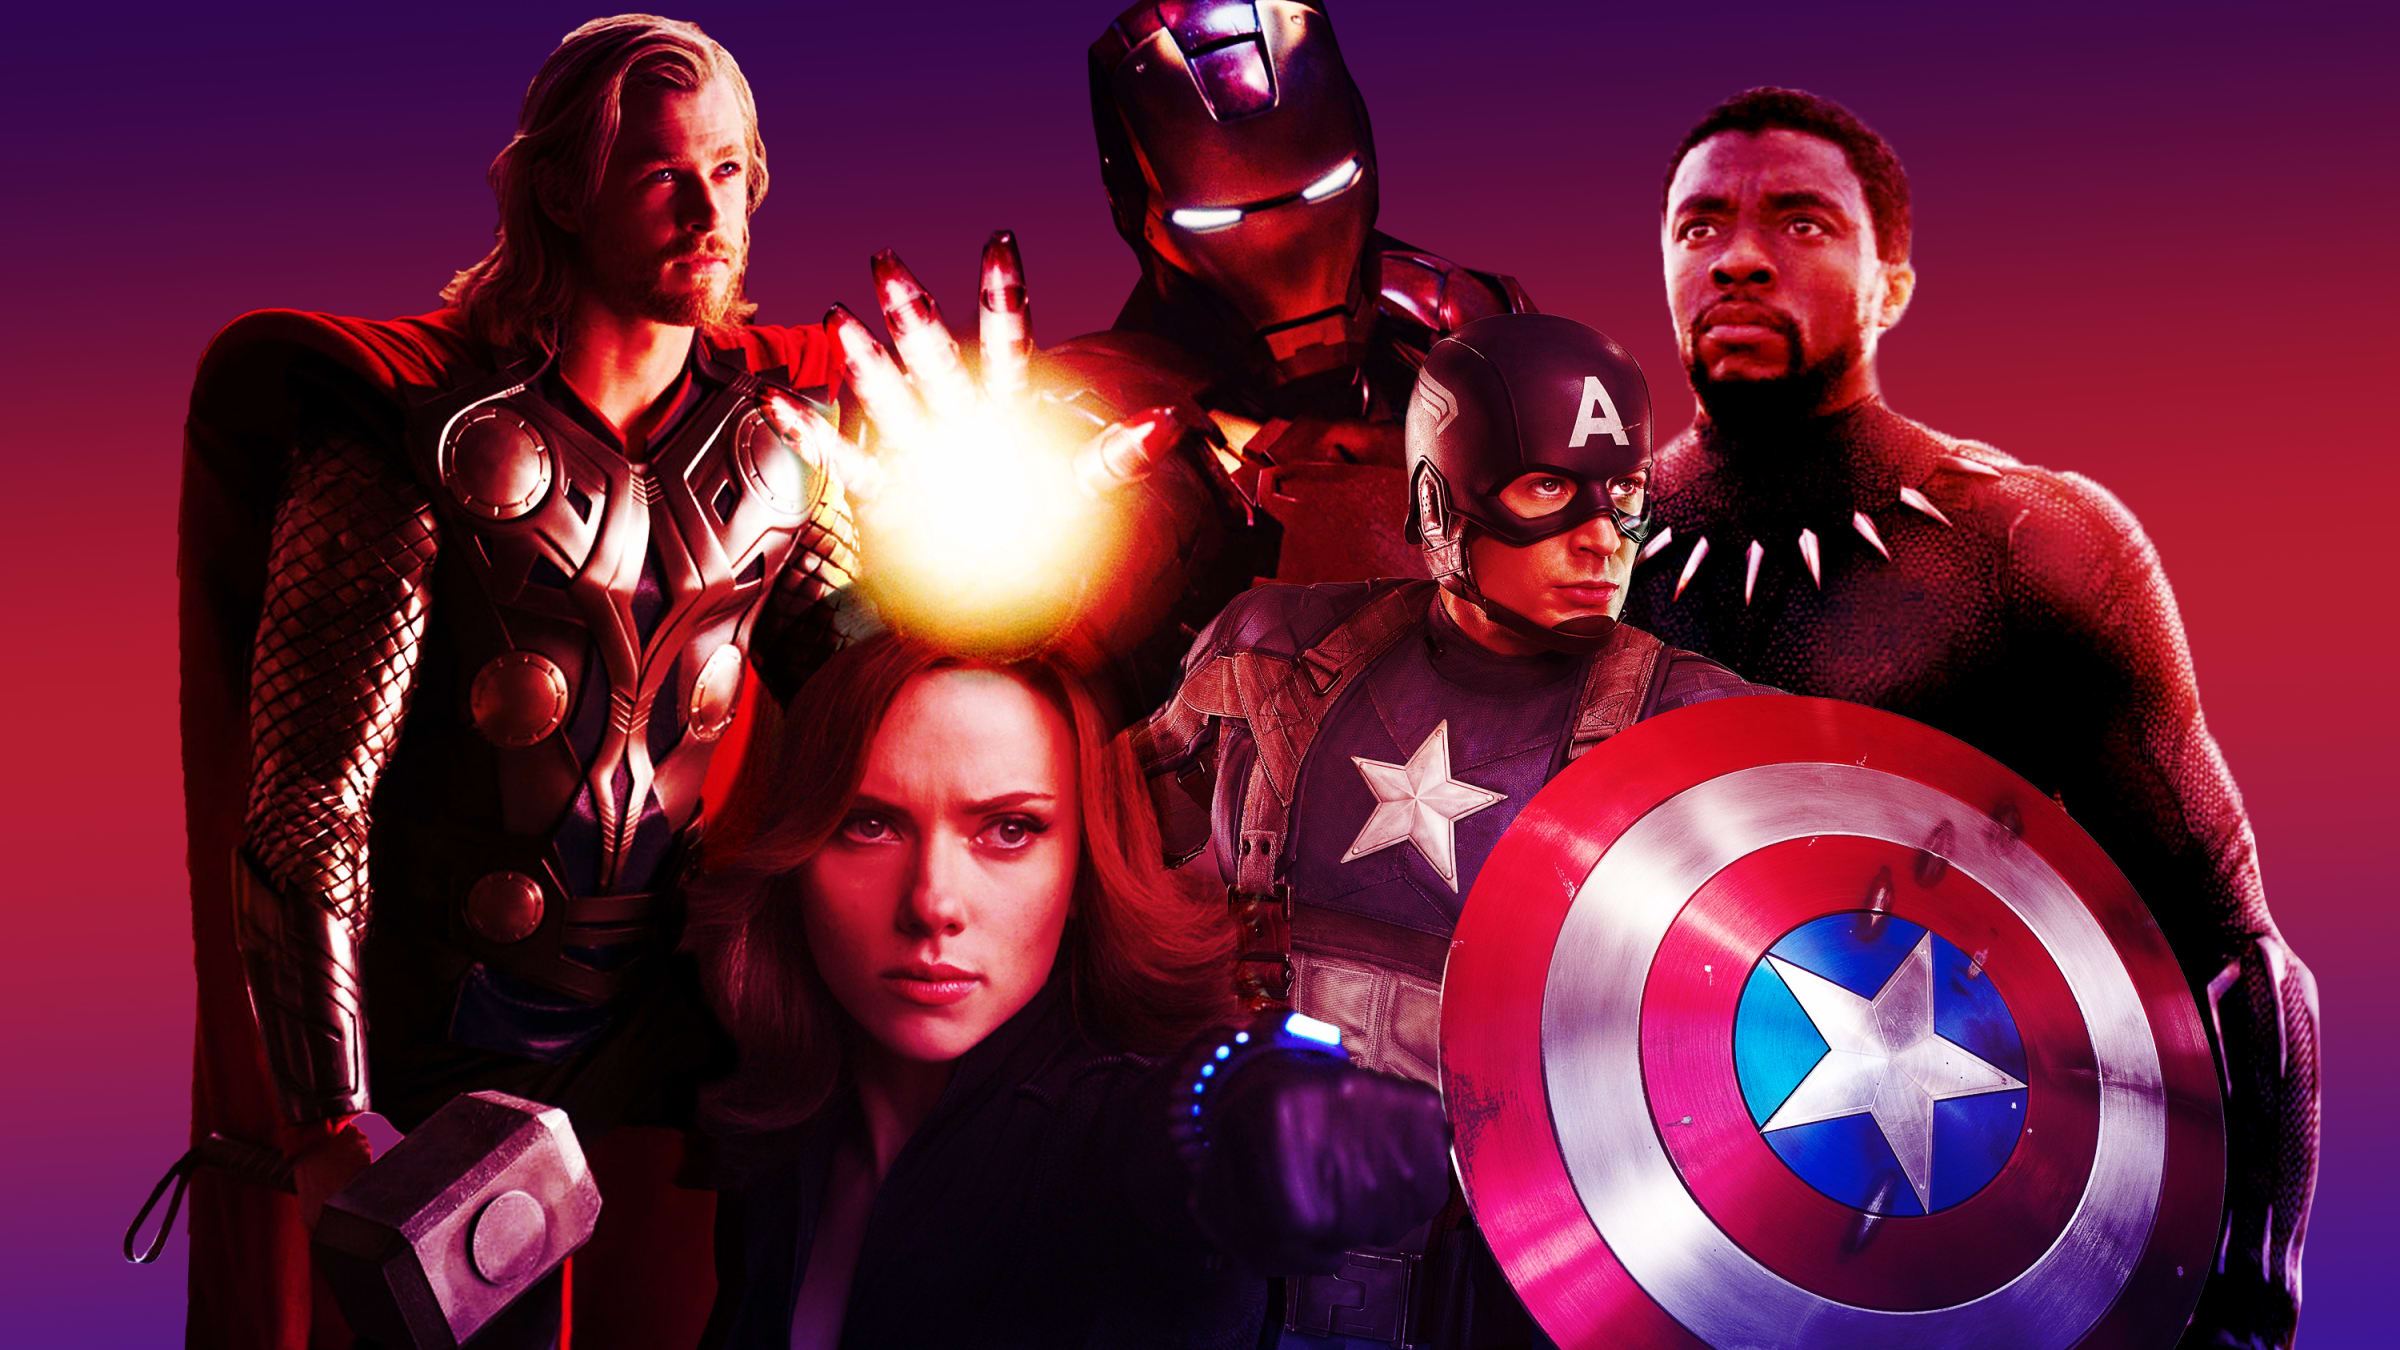 Avengers' Cast & Crew Posters Unite The Marvel Cinematic Universe